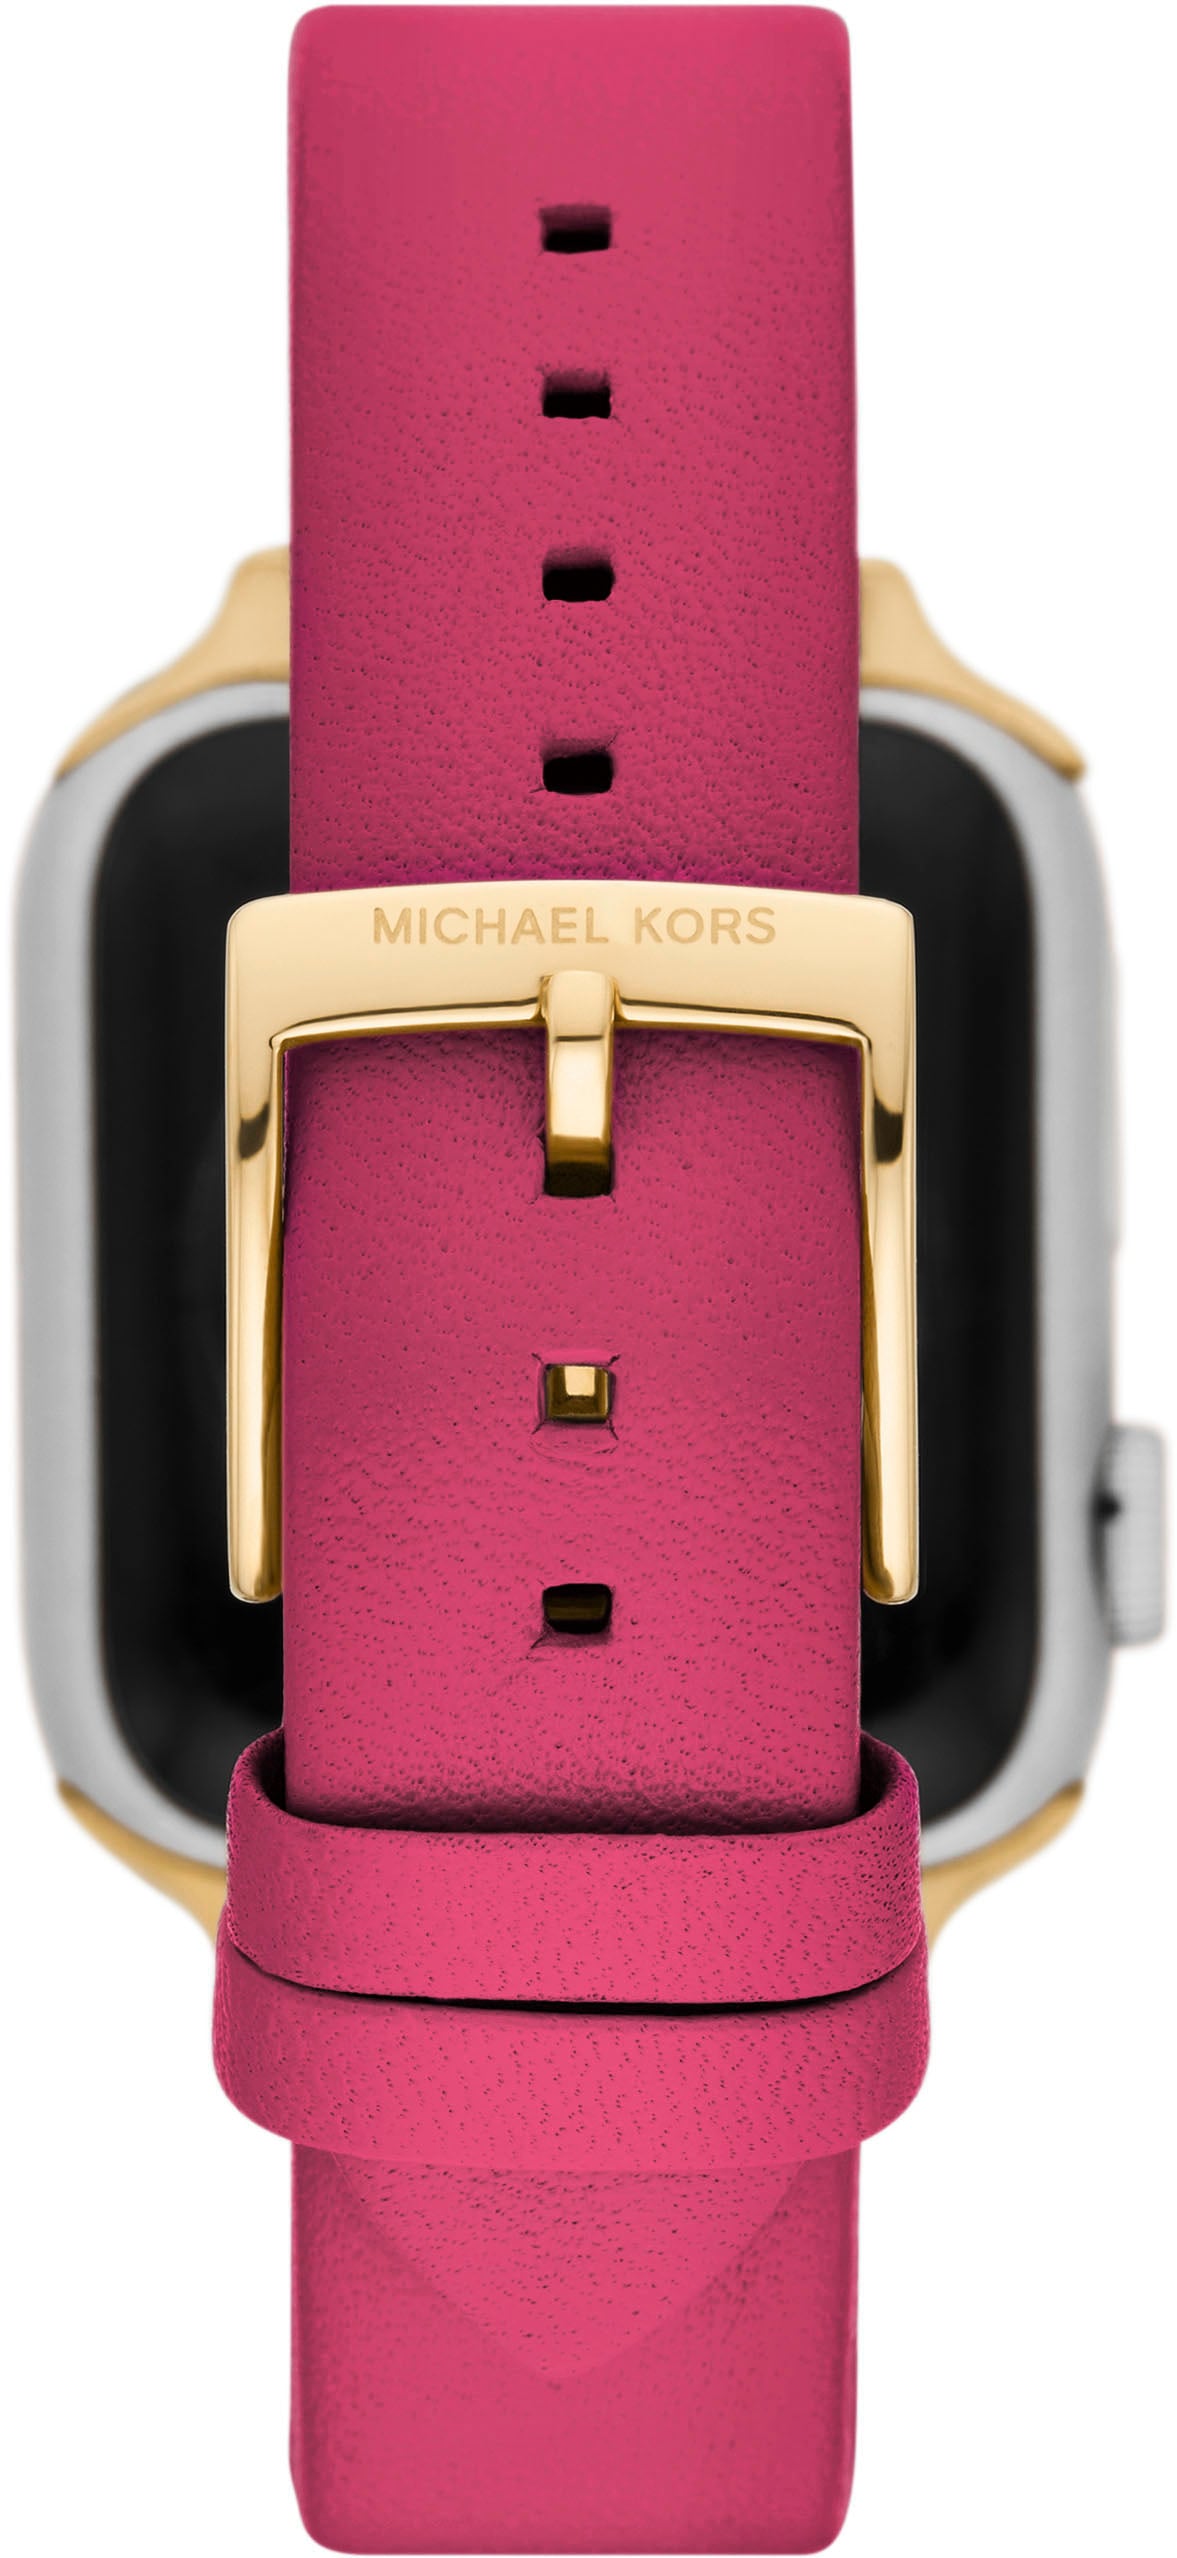 MICHAEL KORS Smartwatch-Armband »Bands for APPLE WATCH, MKS8061E«, Wechselband, Ersatzband, passend für die Apple Watch, Leder